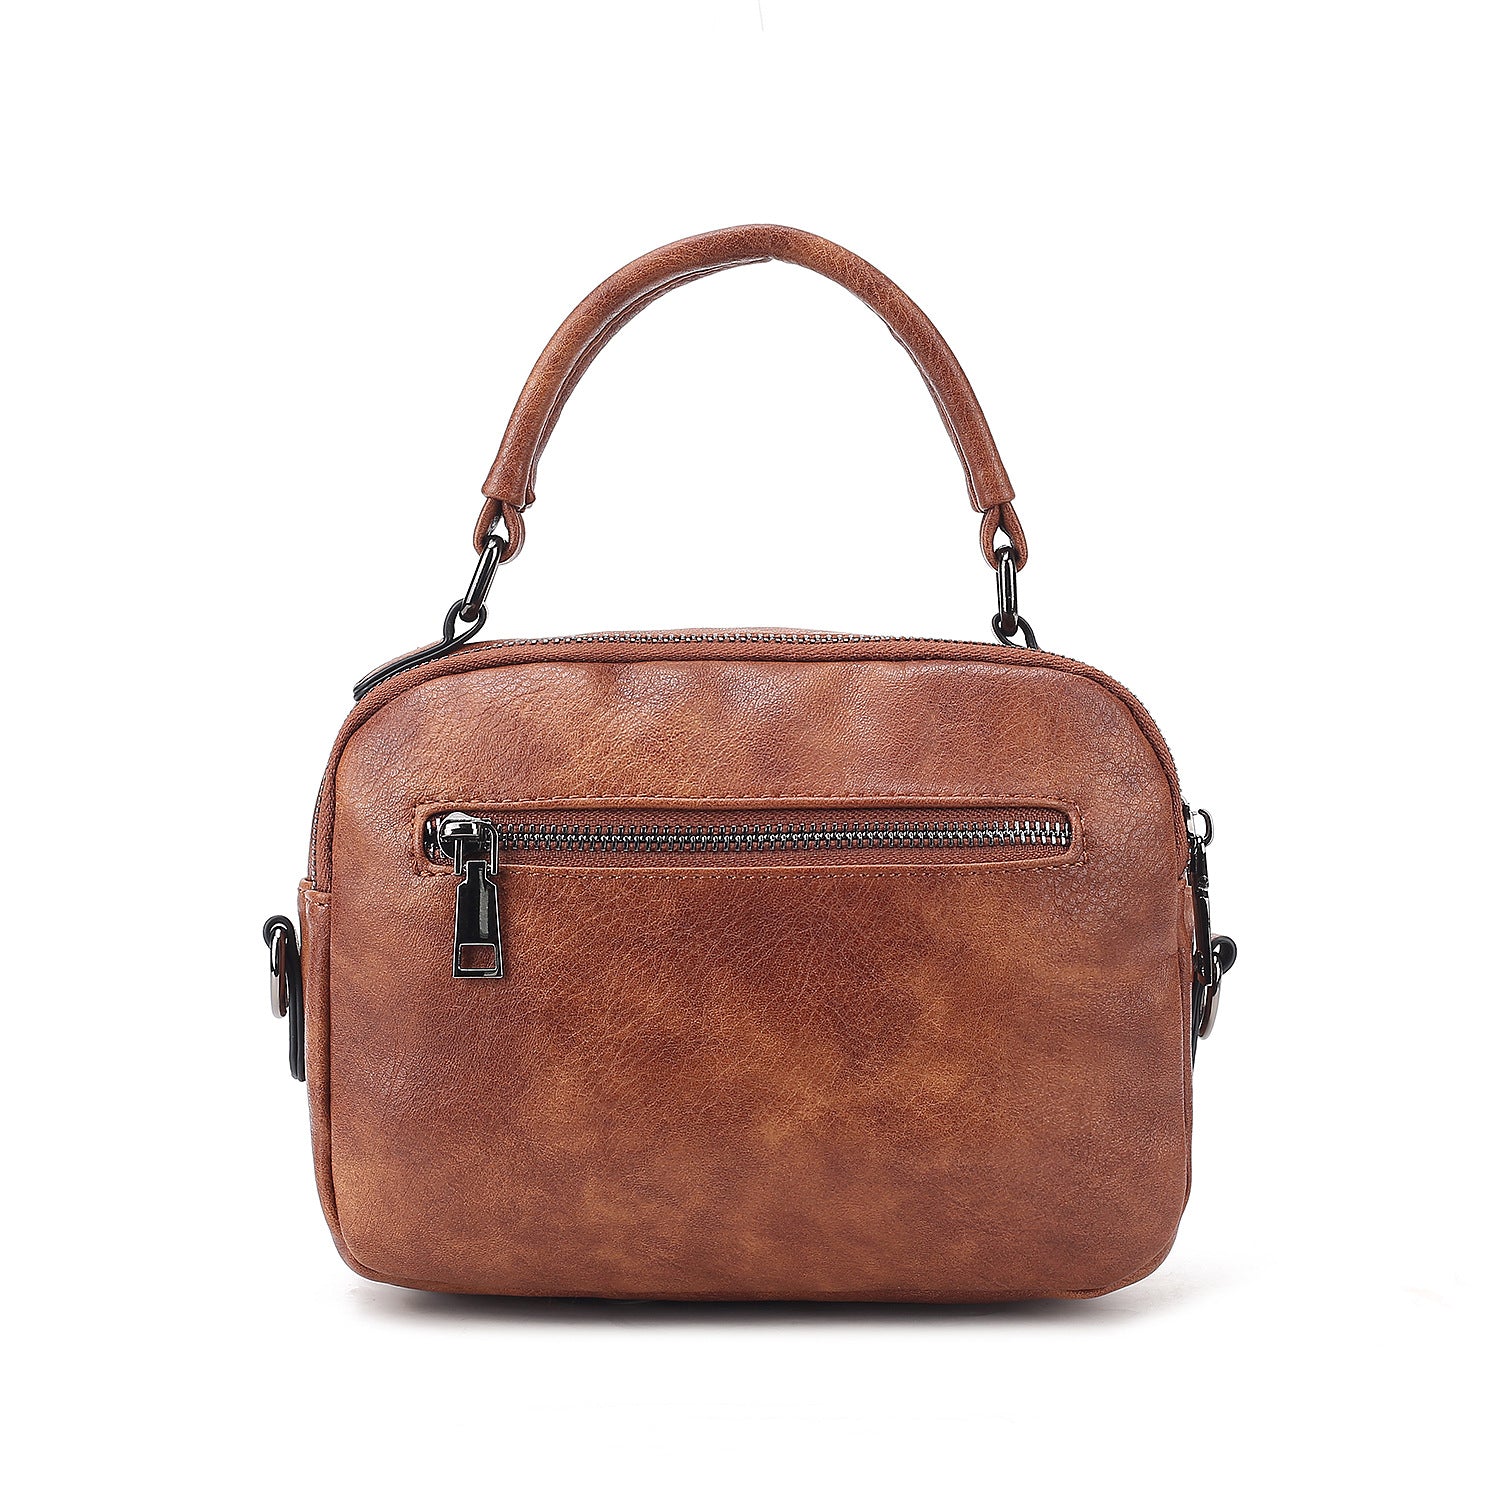 Retro Simple Women's Handbag Texture